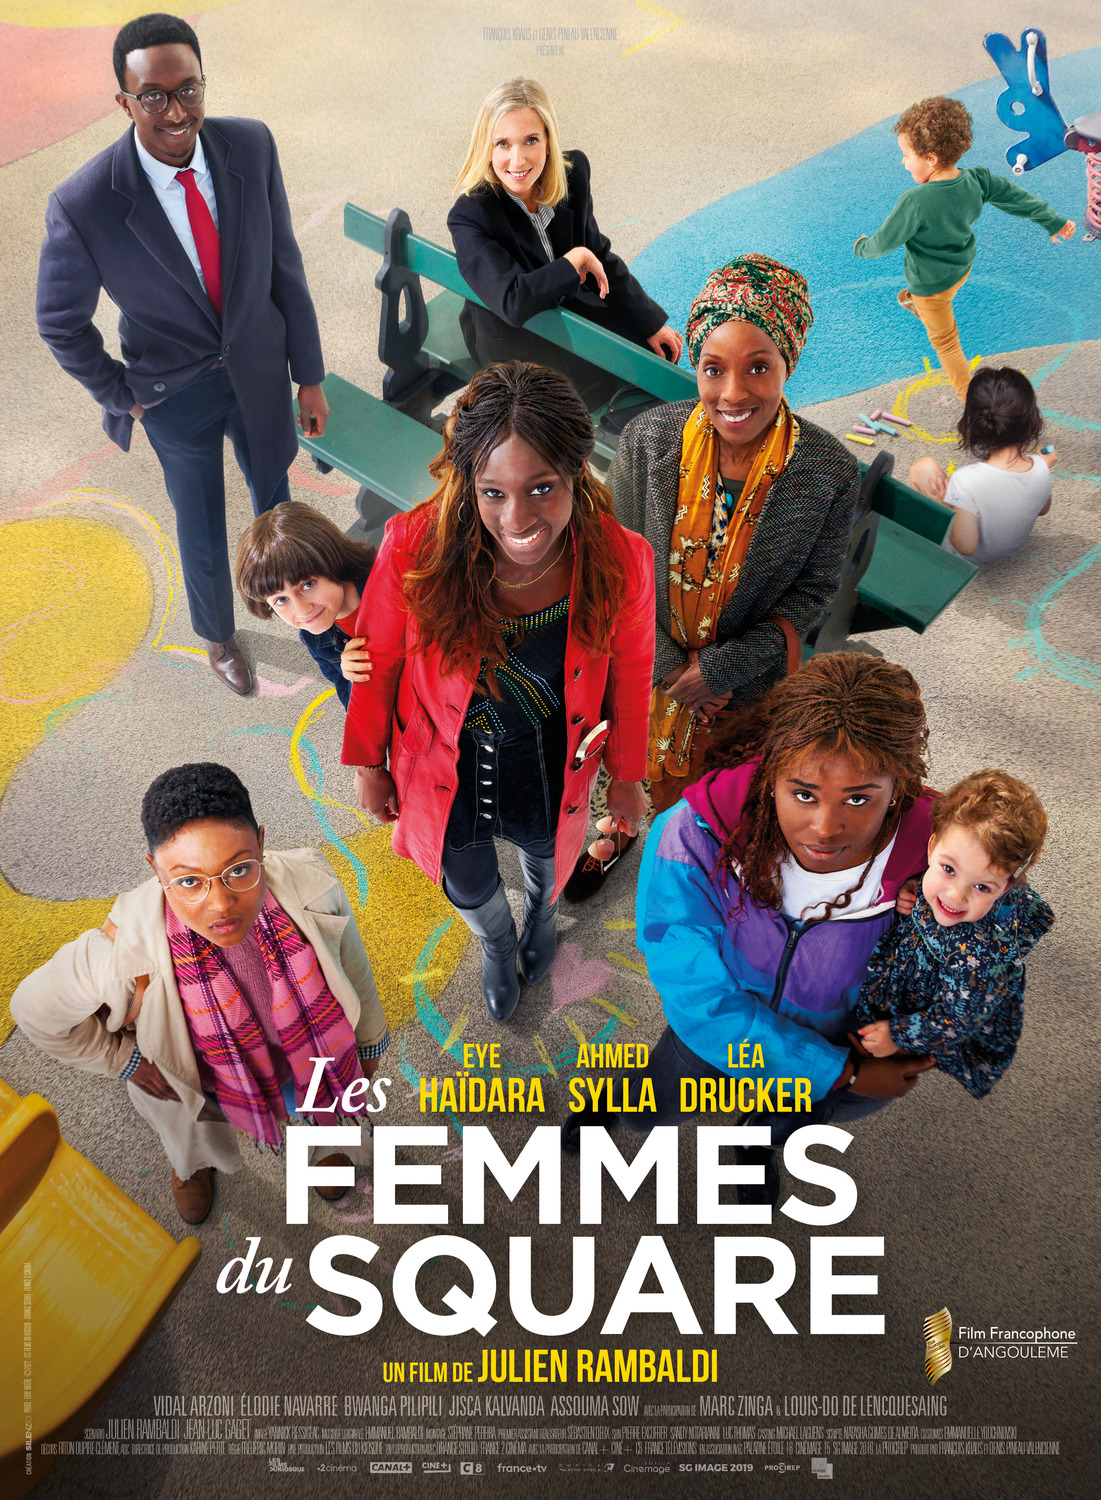 Extra Large Movie Poster Image for Les femmes du square 